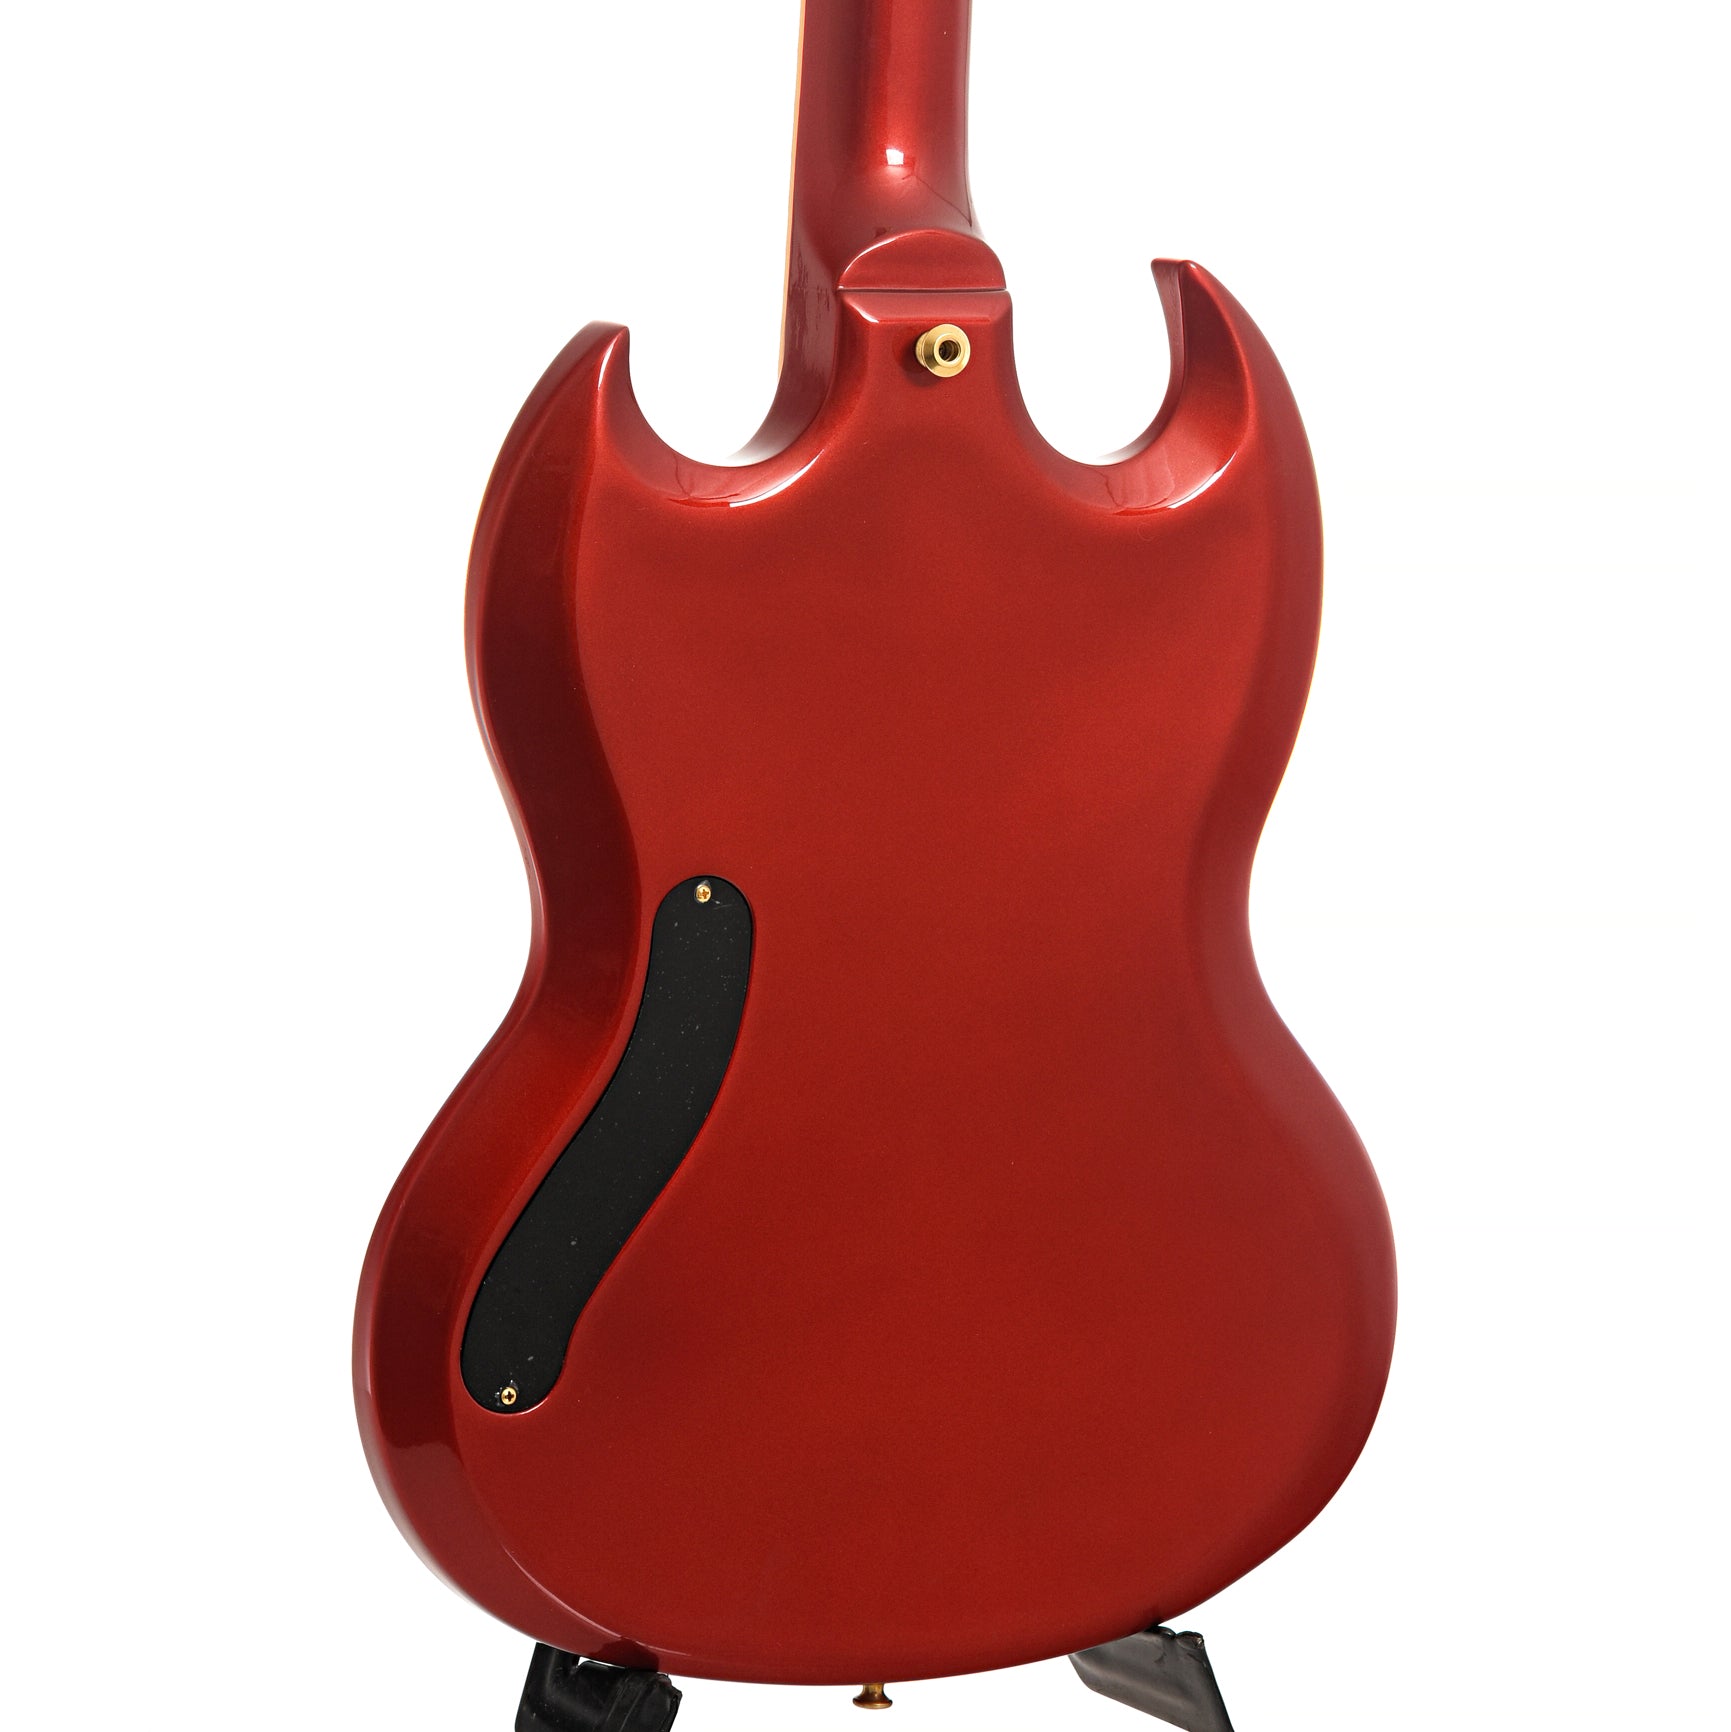 1962 Gibson SG Junior Guitar - El Diablo Amps Online Store